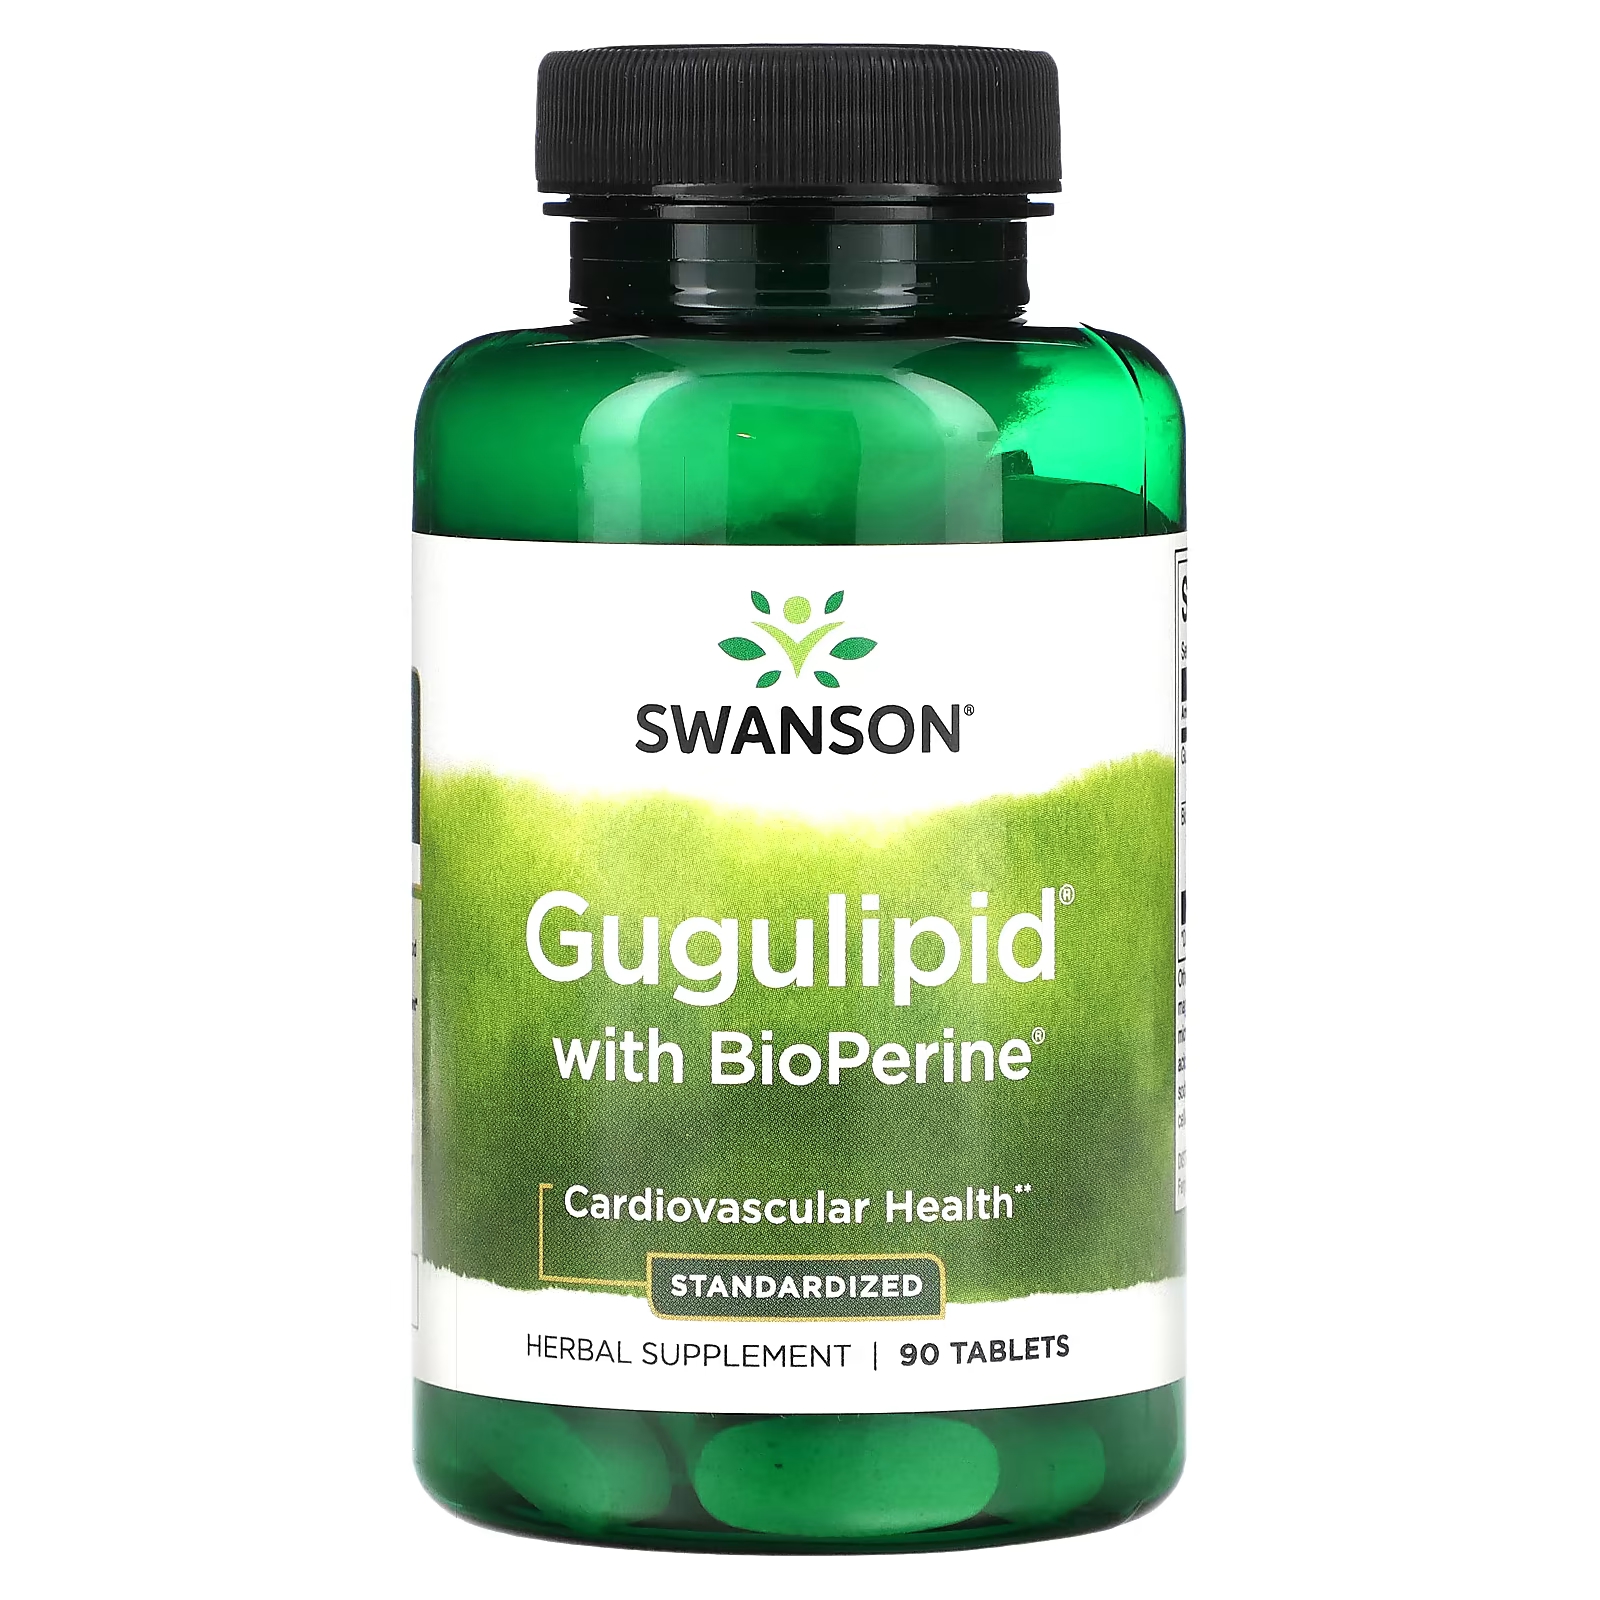 думенко василий о здоровье тела разума души Гугулипид Swanson BioPerine со стандартизированным, 90 таблеток